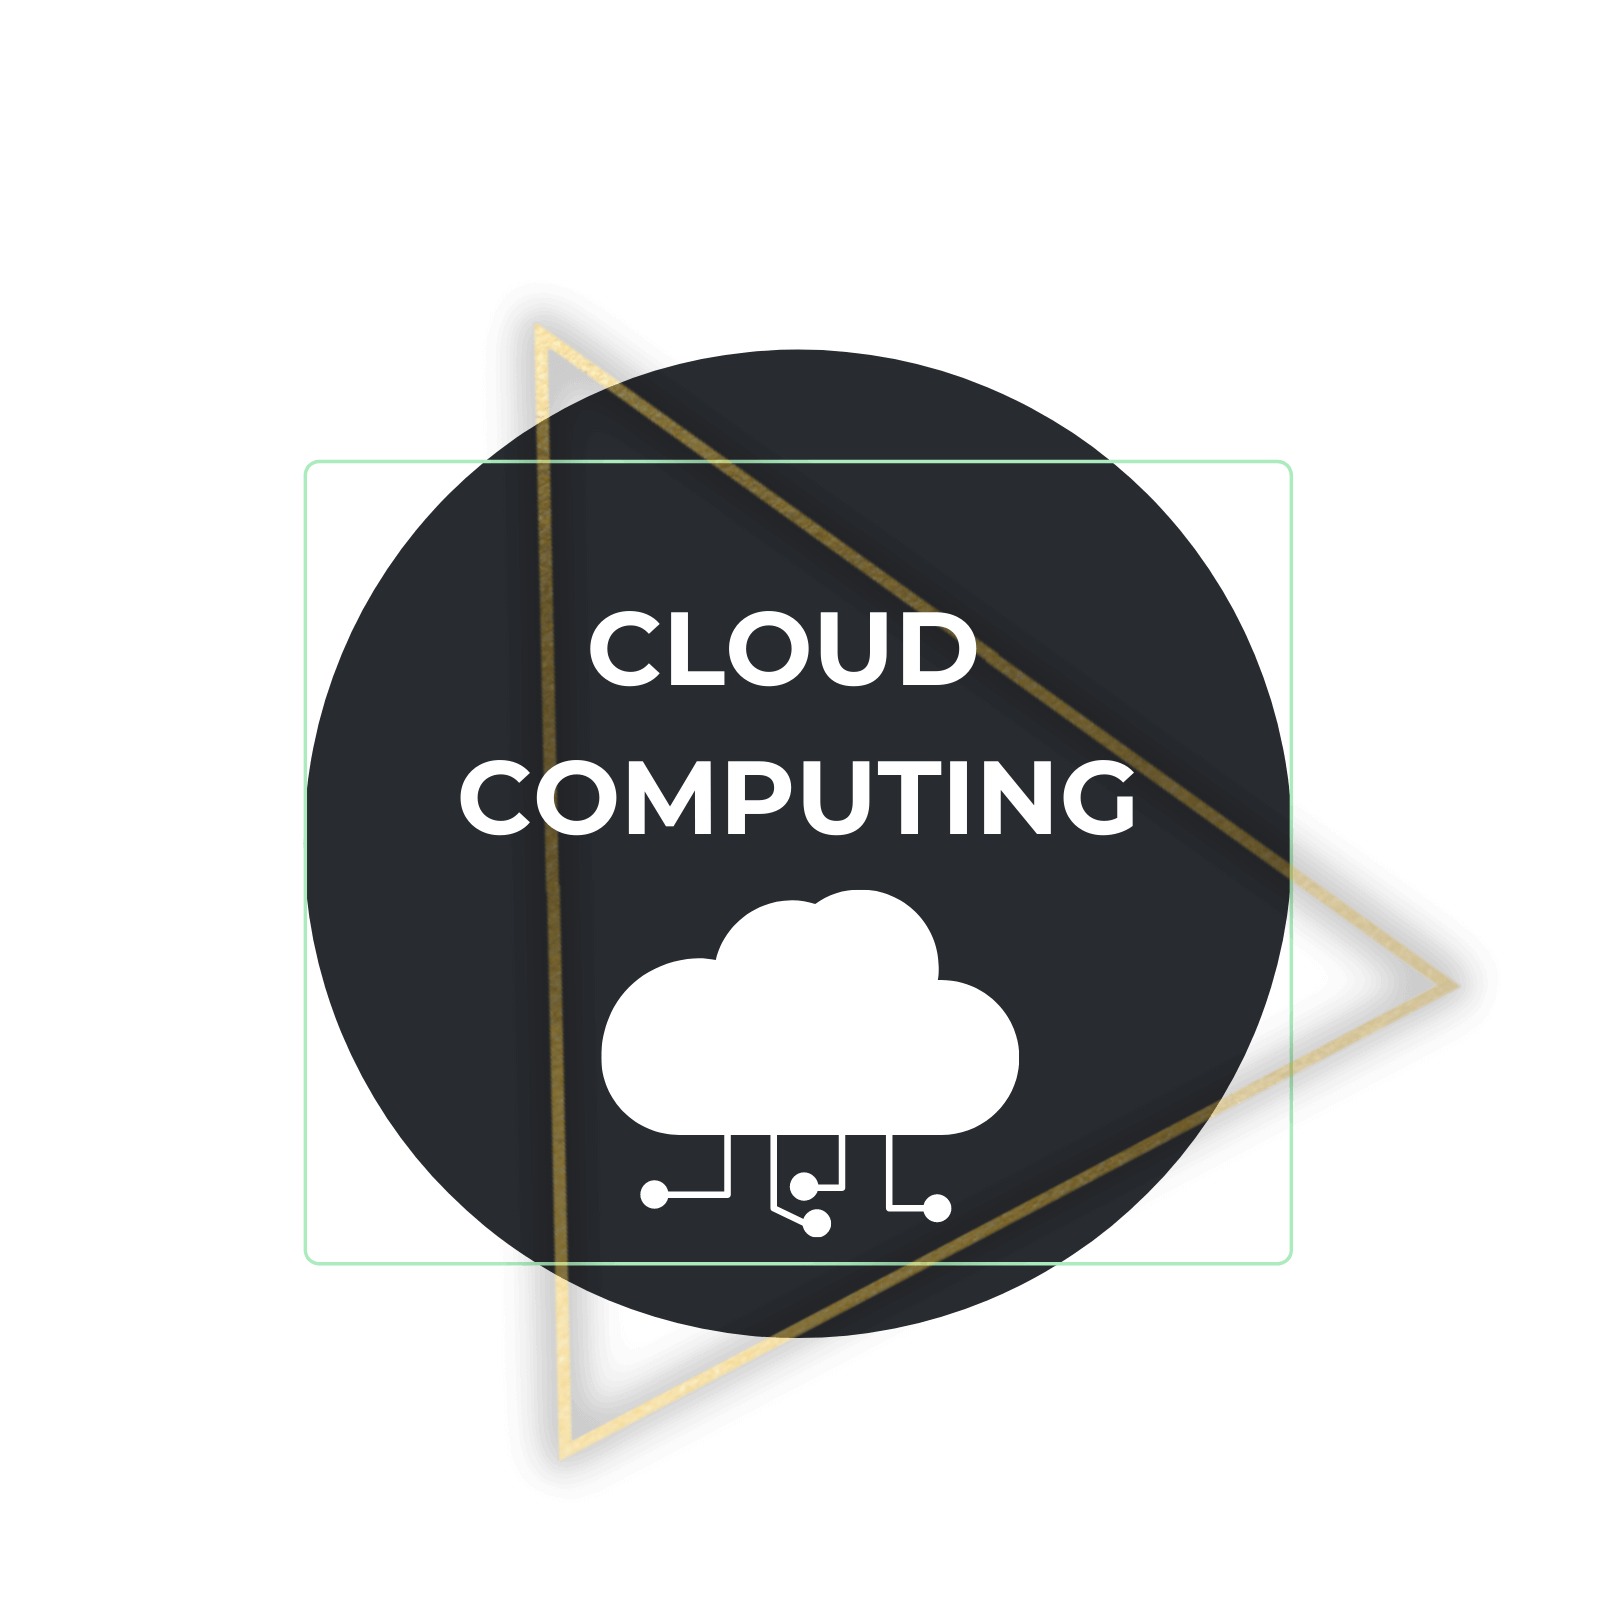 Cloud Computing, Agile Business Concepts